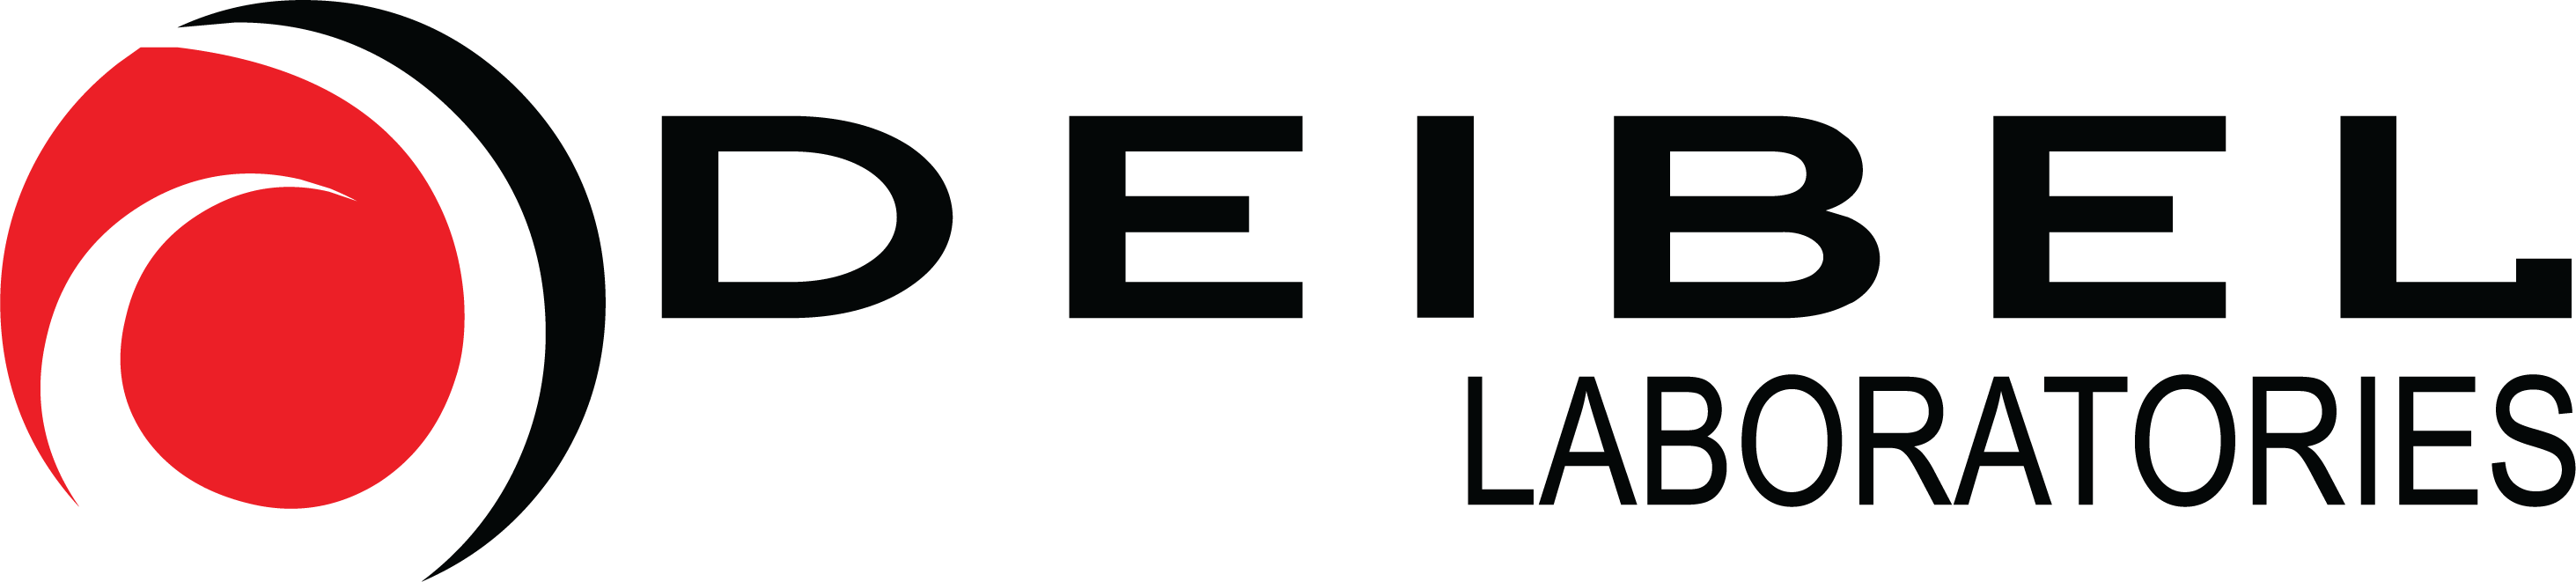 Deibel Laboratories logo-1